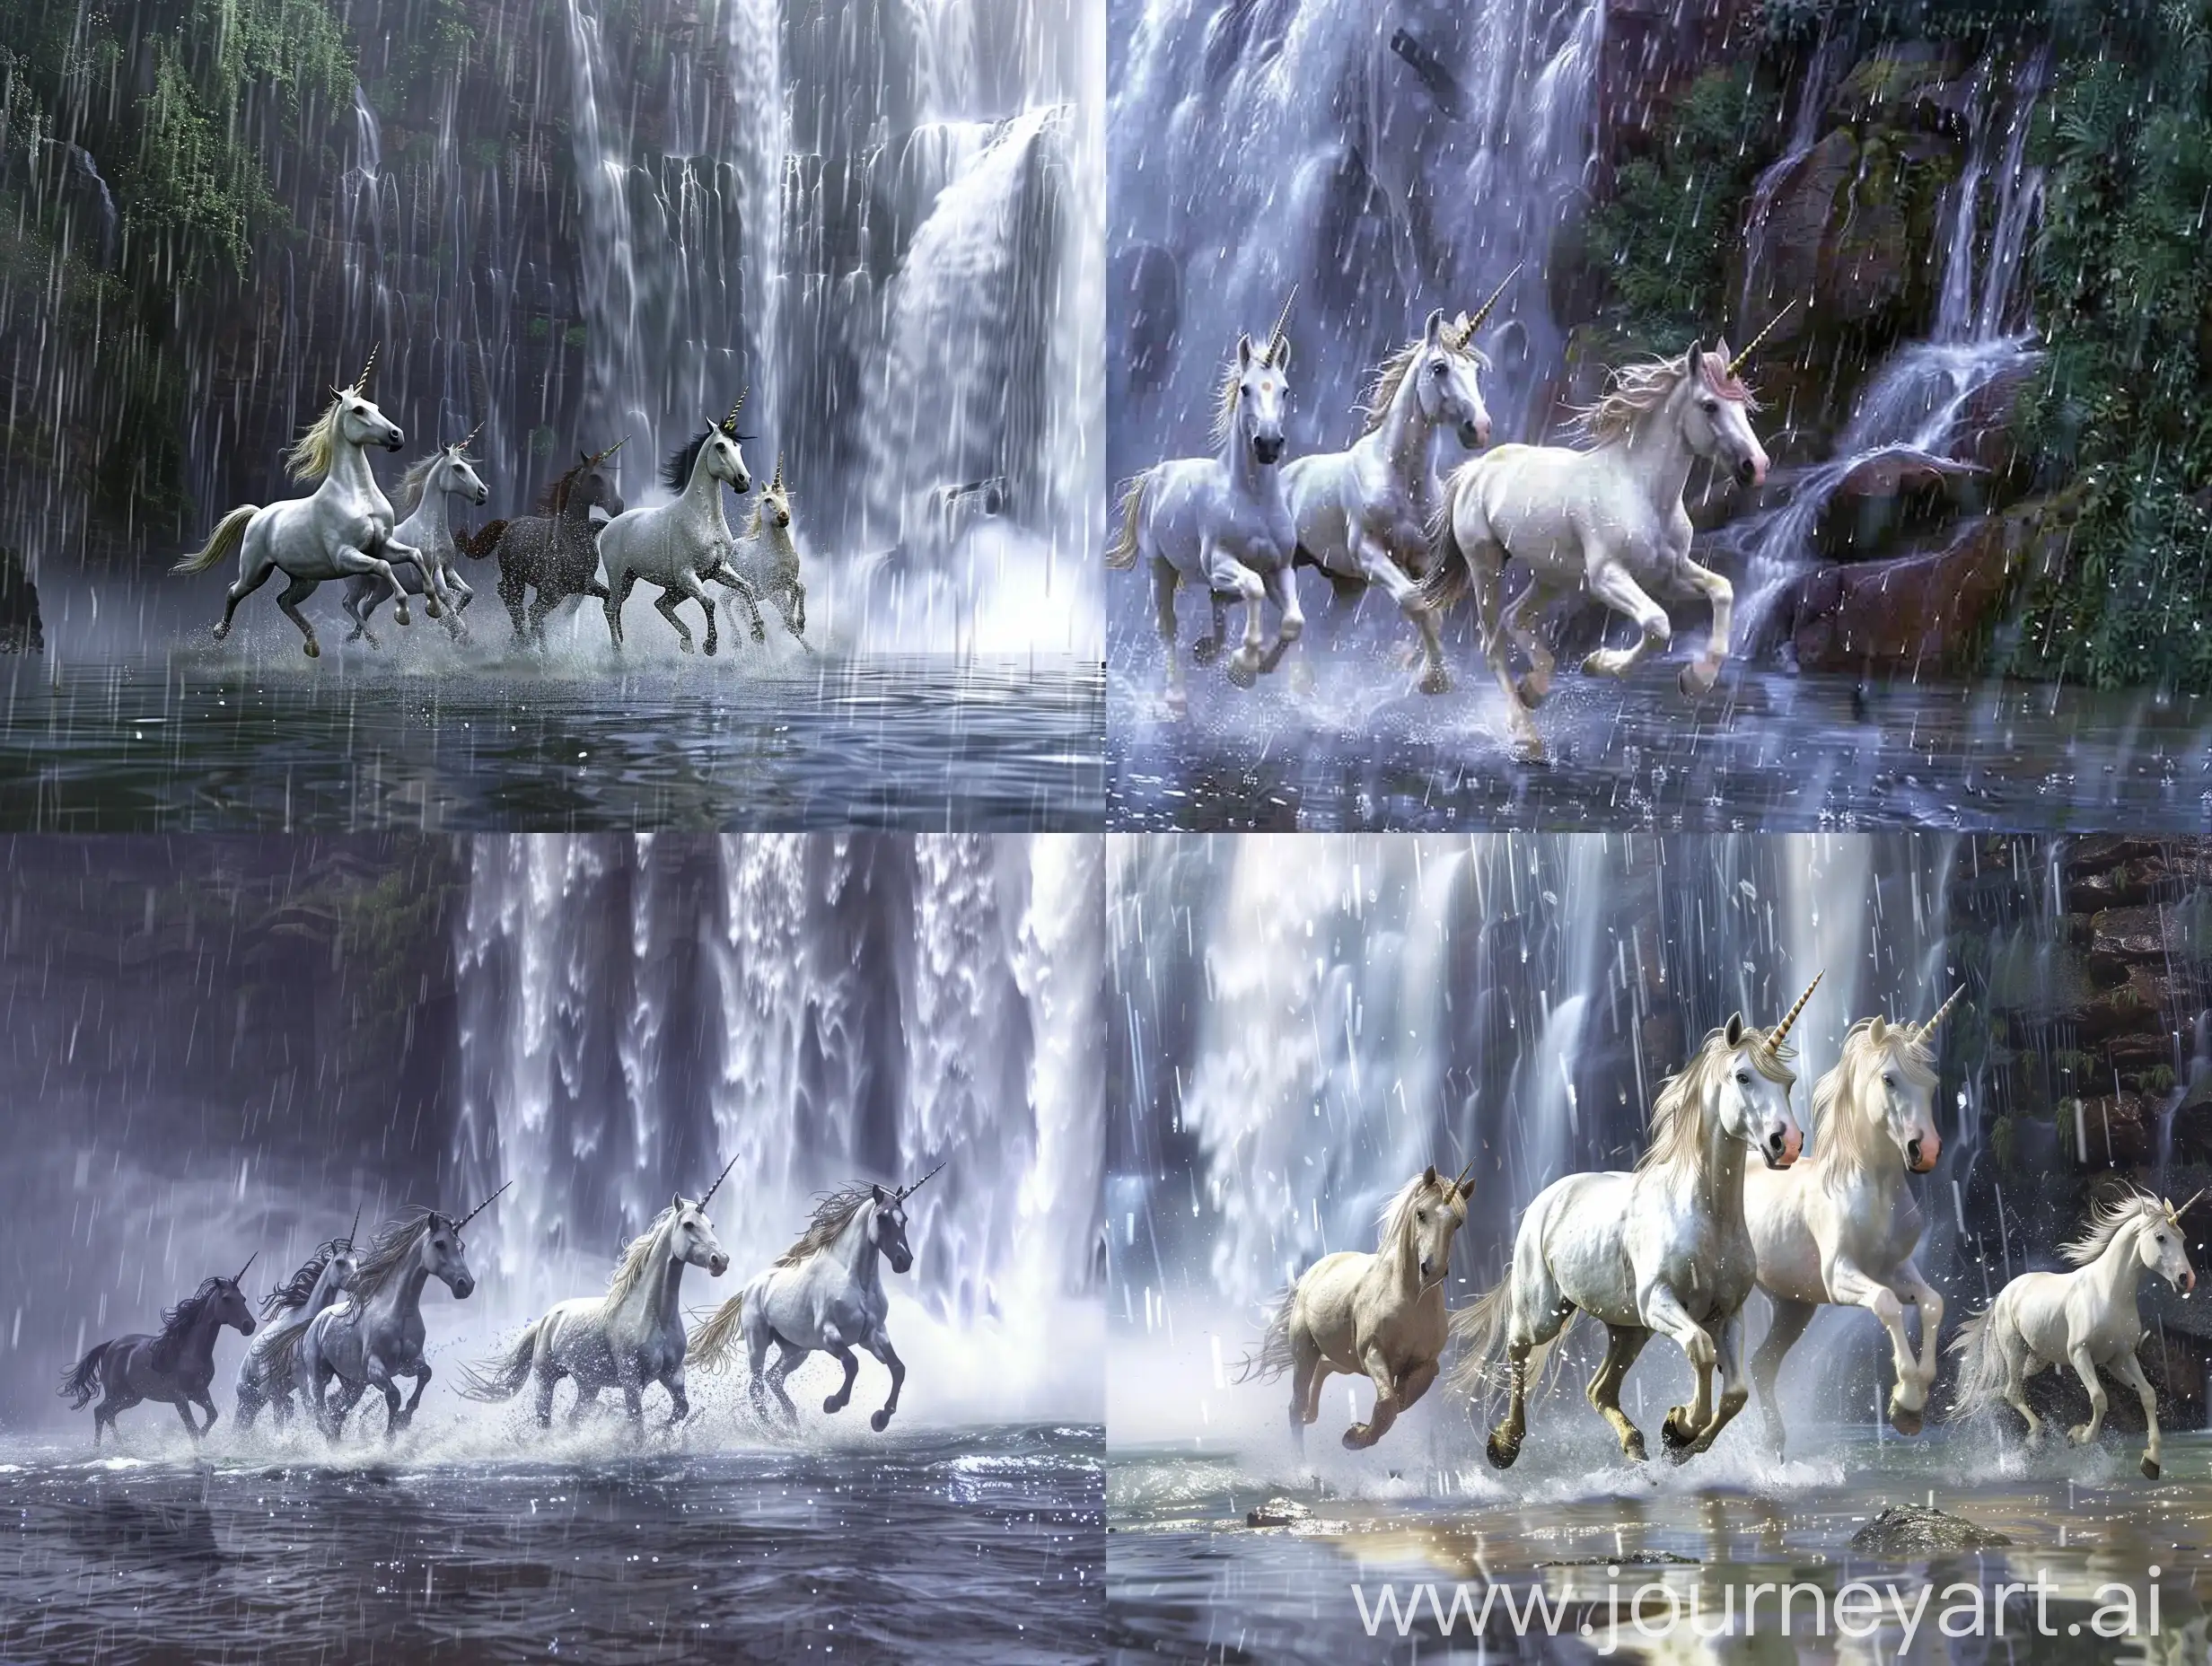 Create a realistic image of unicorns running in the rain near the waterfall